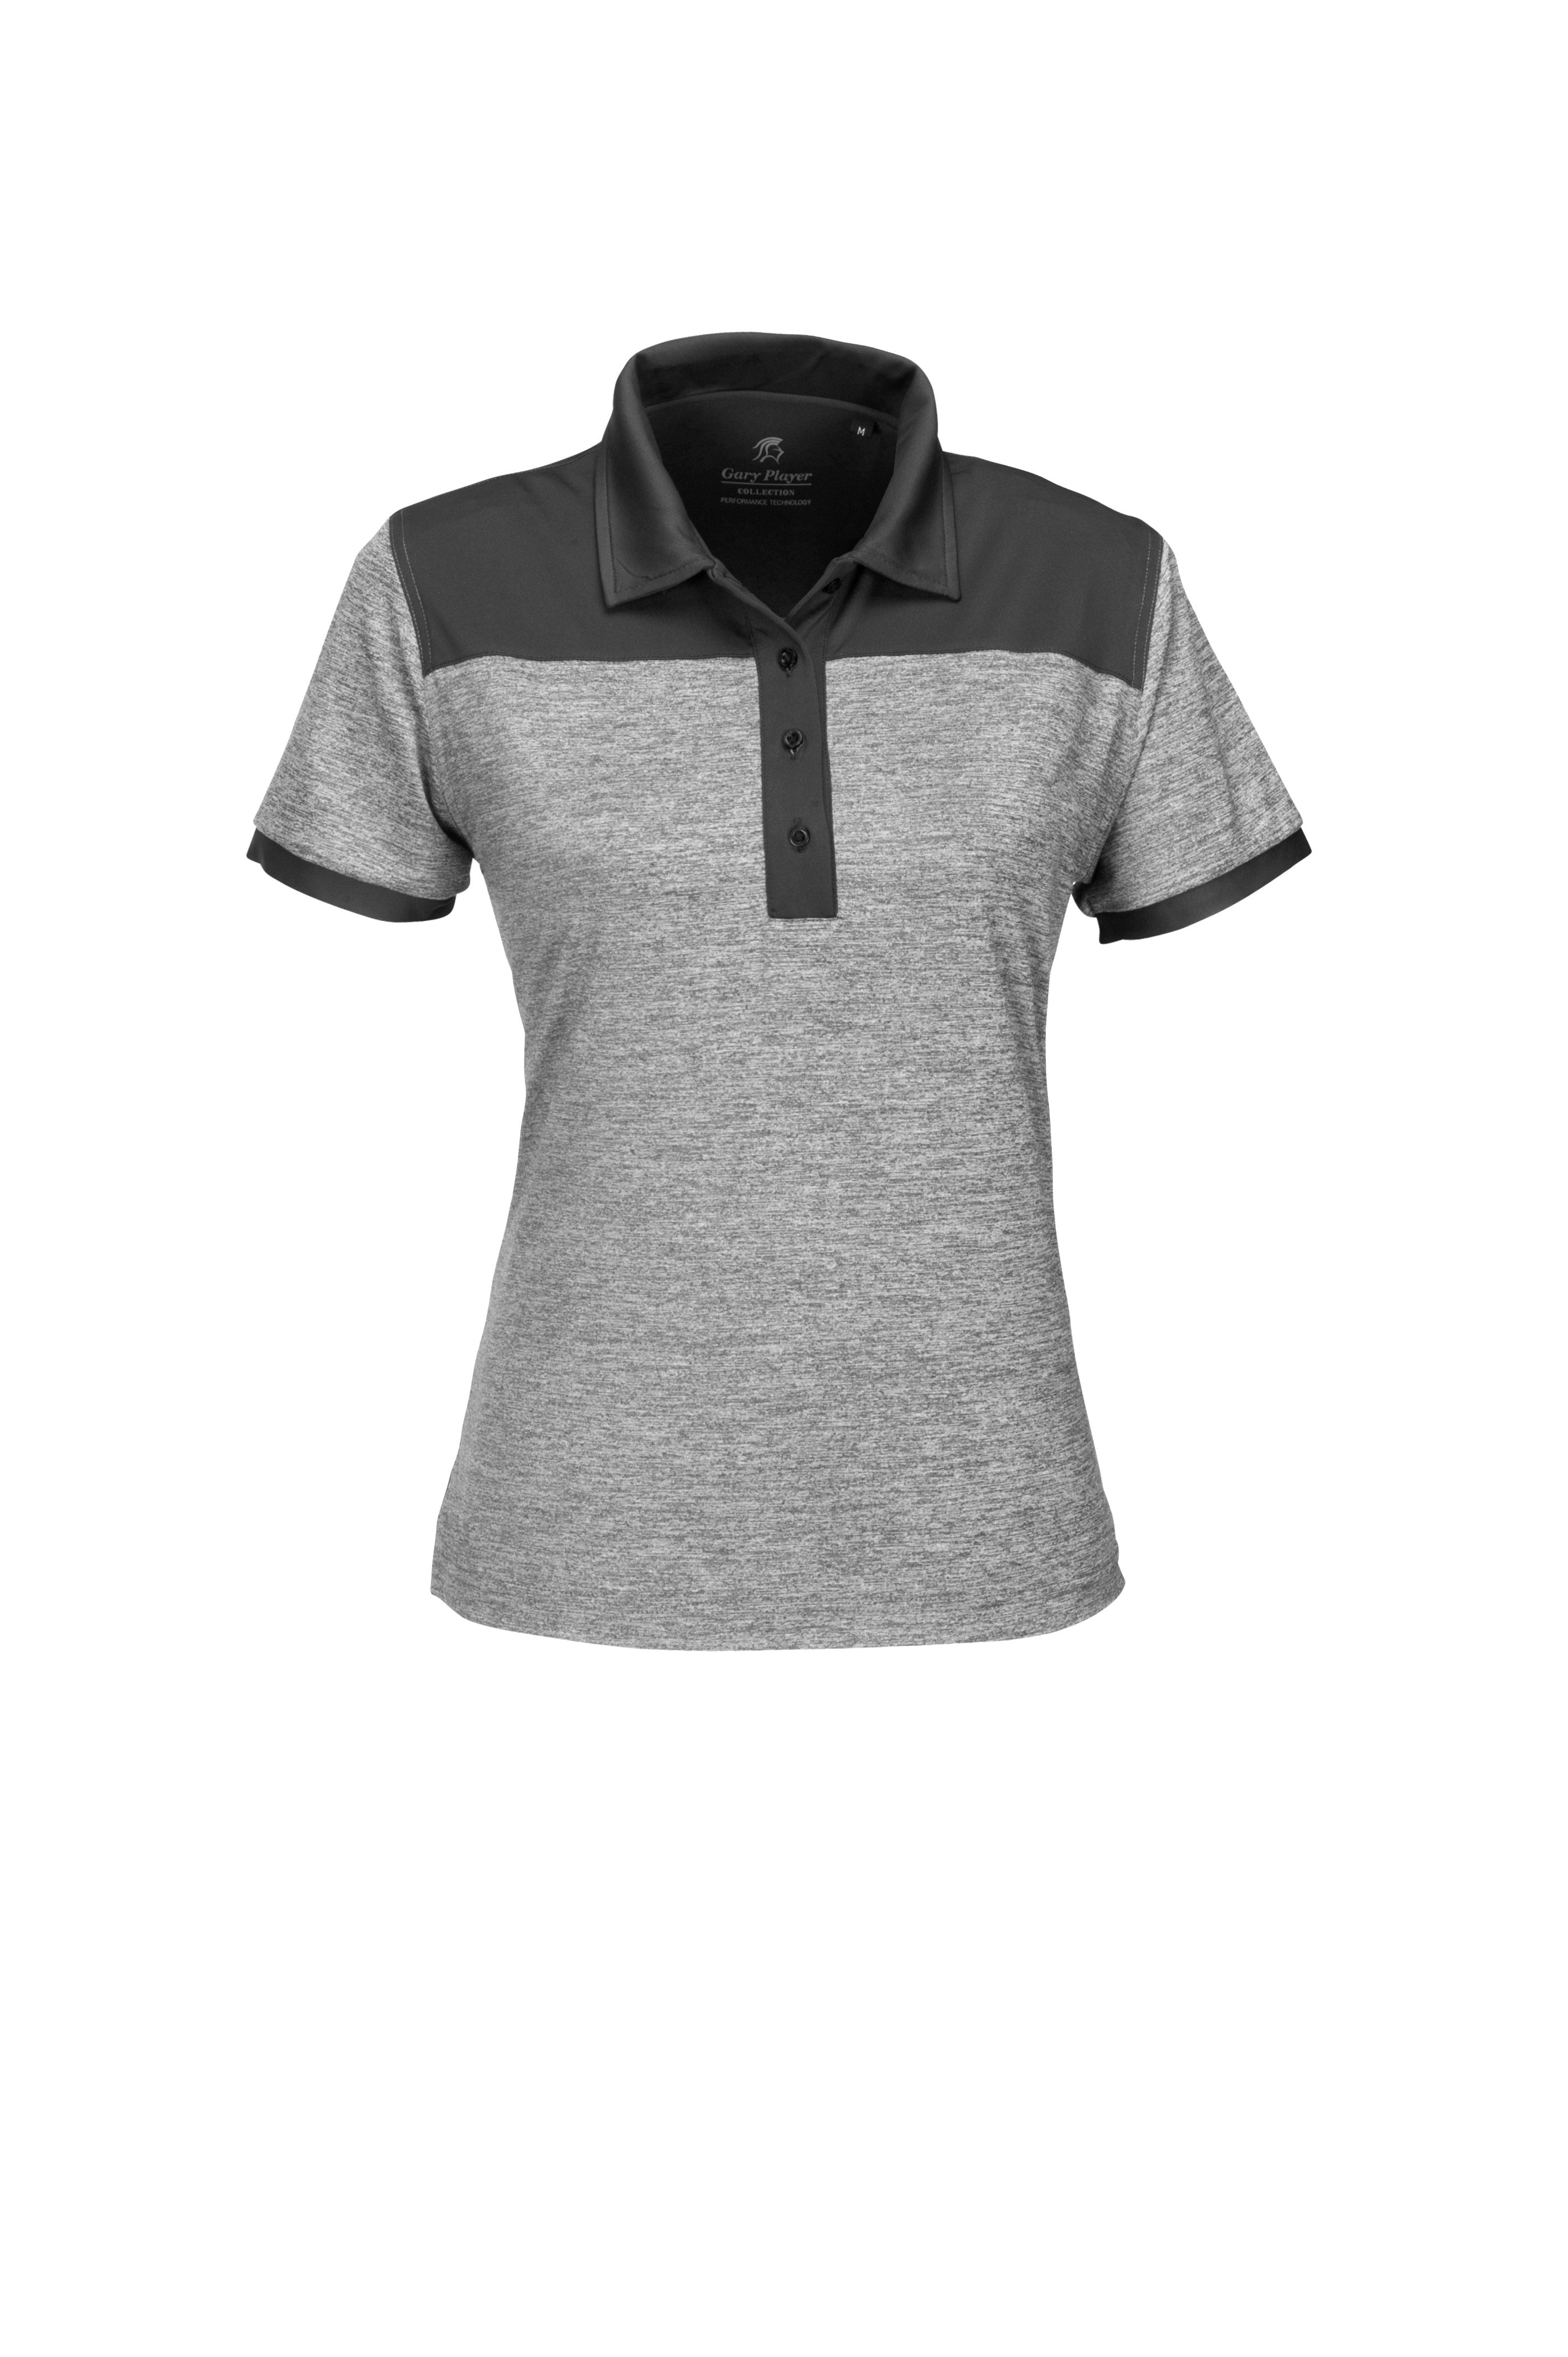 Ladies Baytree Golf Shirt - Light Blue Only-2XL-Black-BL